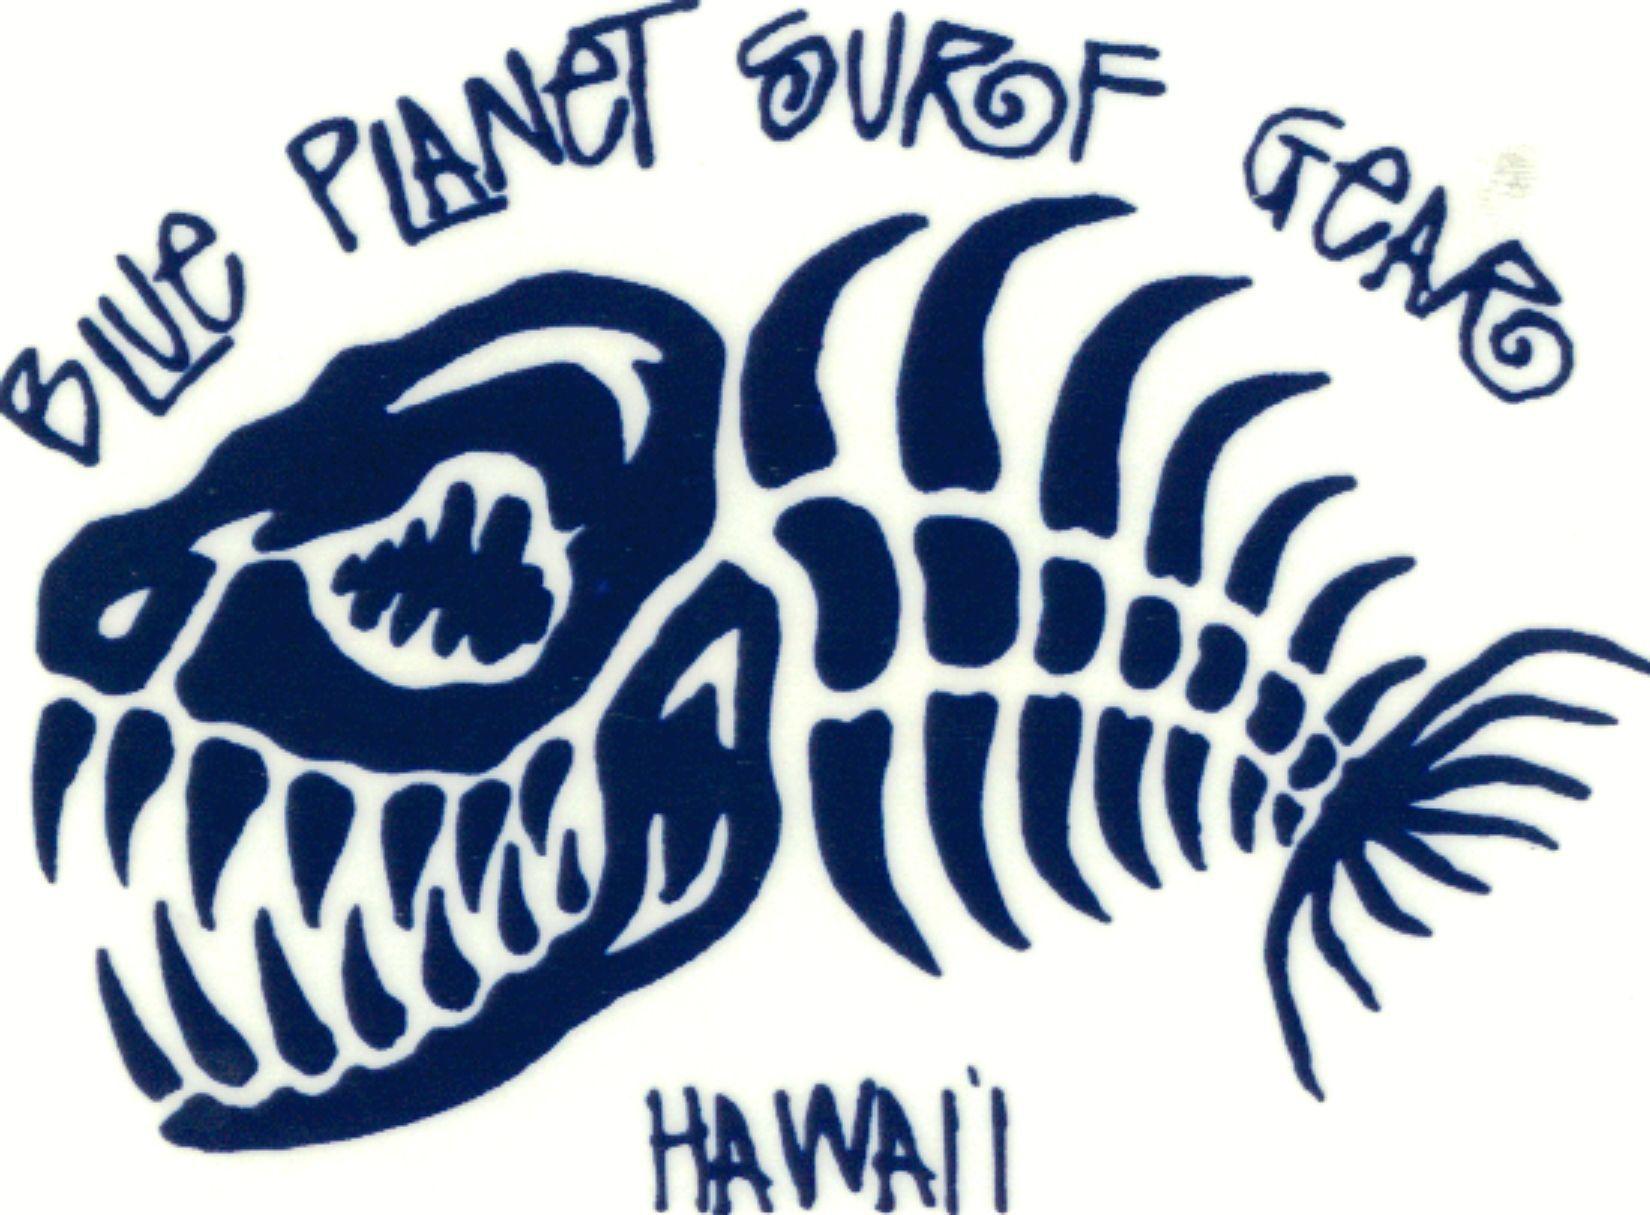 Surf Gear Logo - Blue Planet Surf Gear logo | Design in 2019 | Surfing, Planets, Gear ...